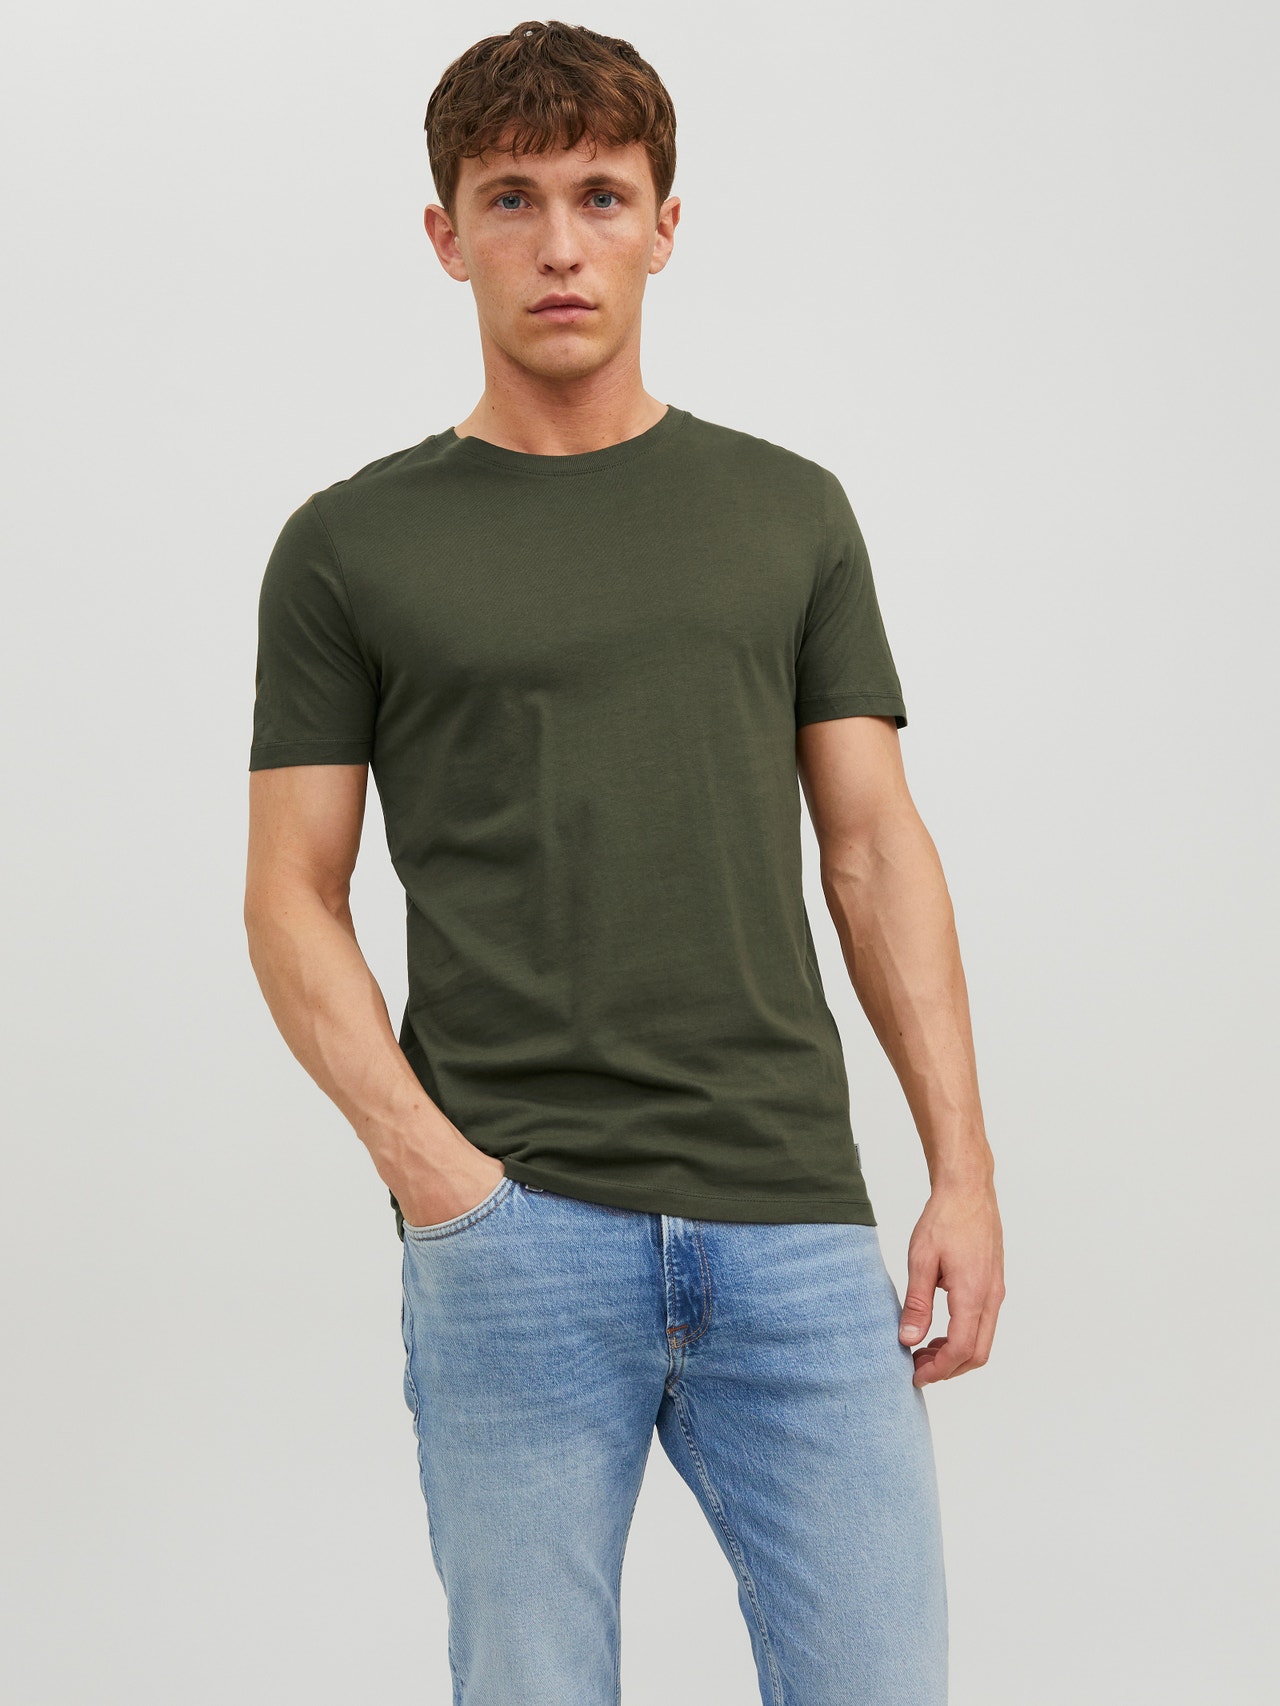 Jack & Jones Standard Fit O-Neck T-Shirt -Olive Night - 12156101